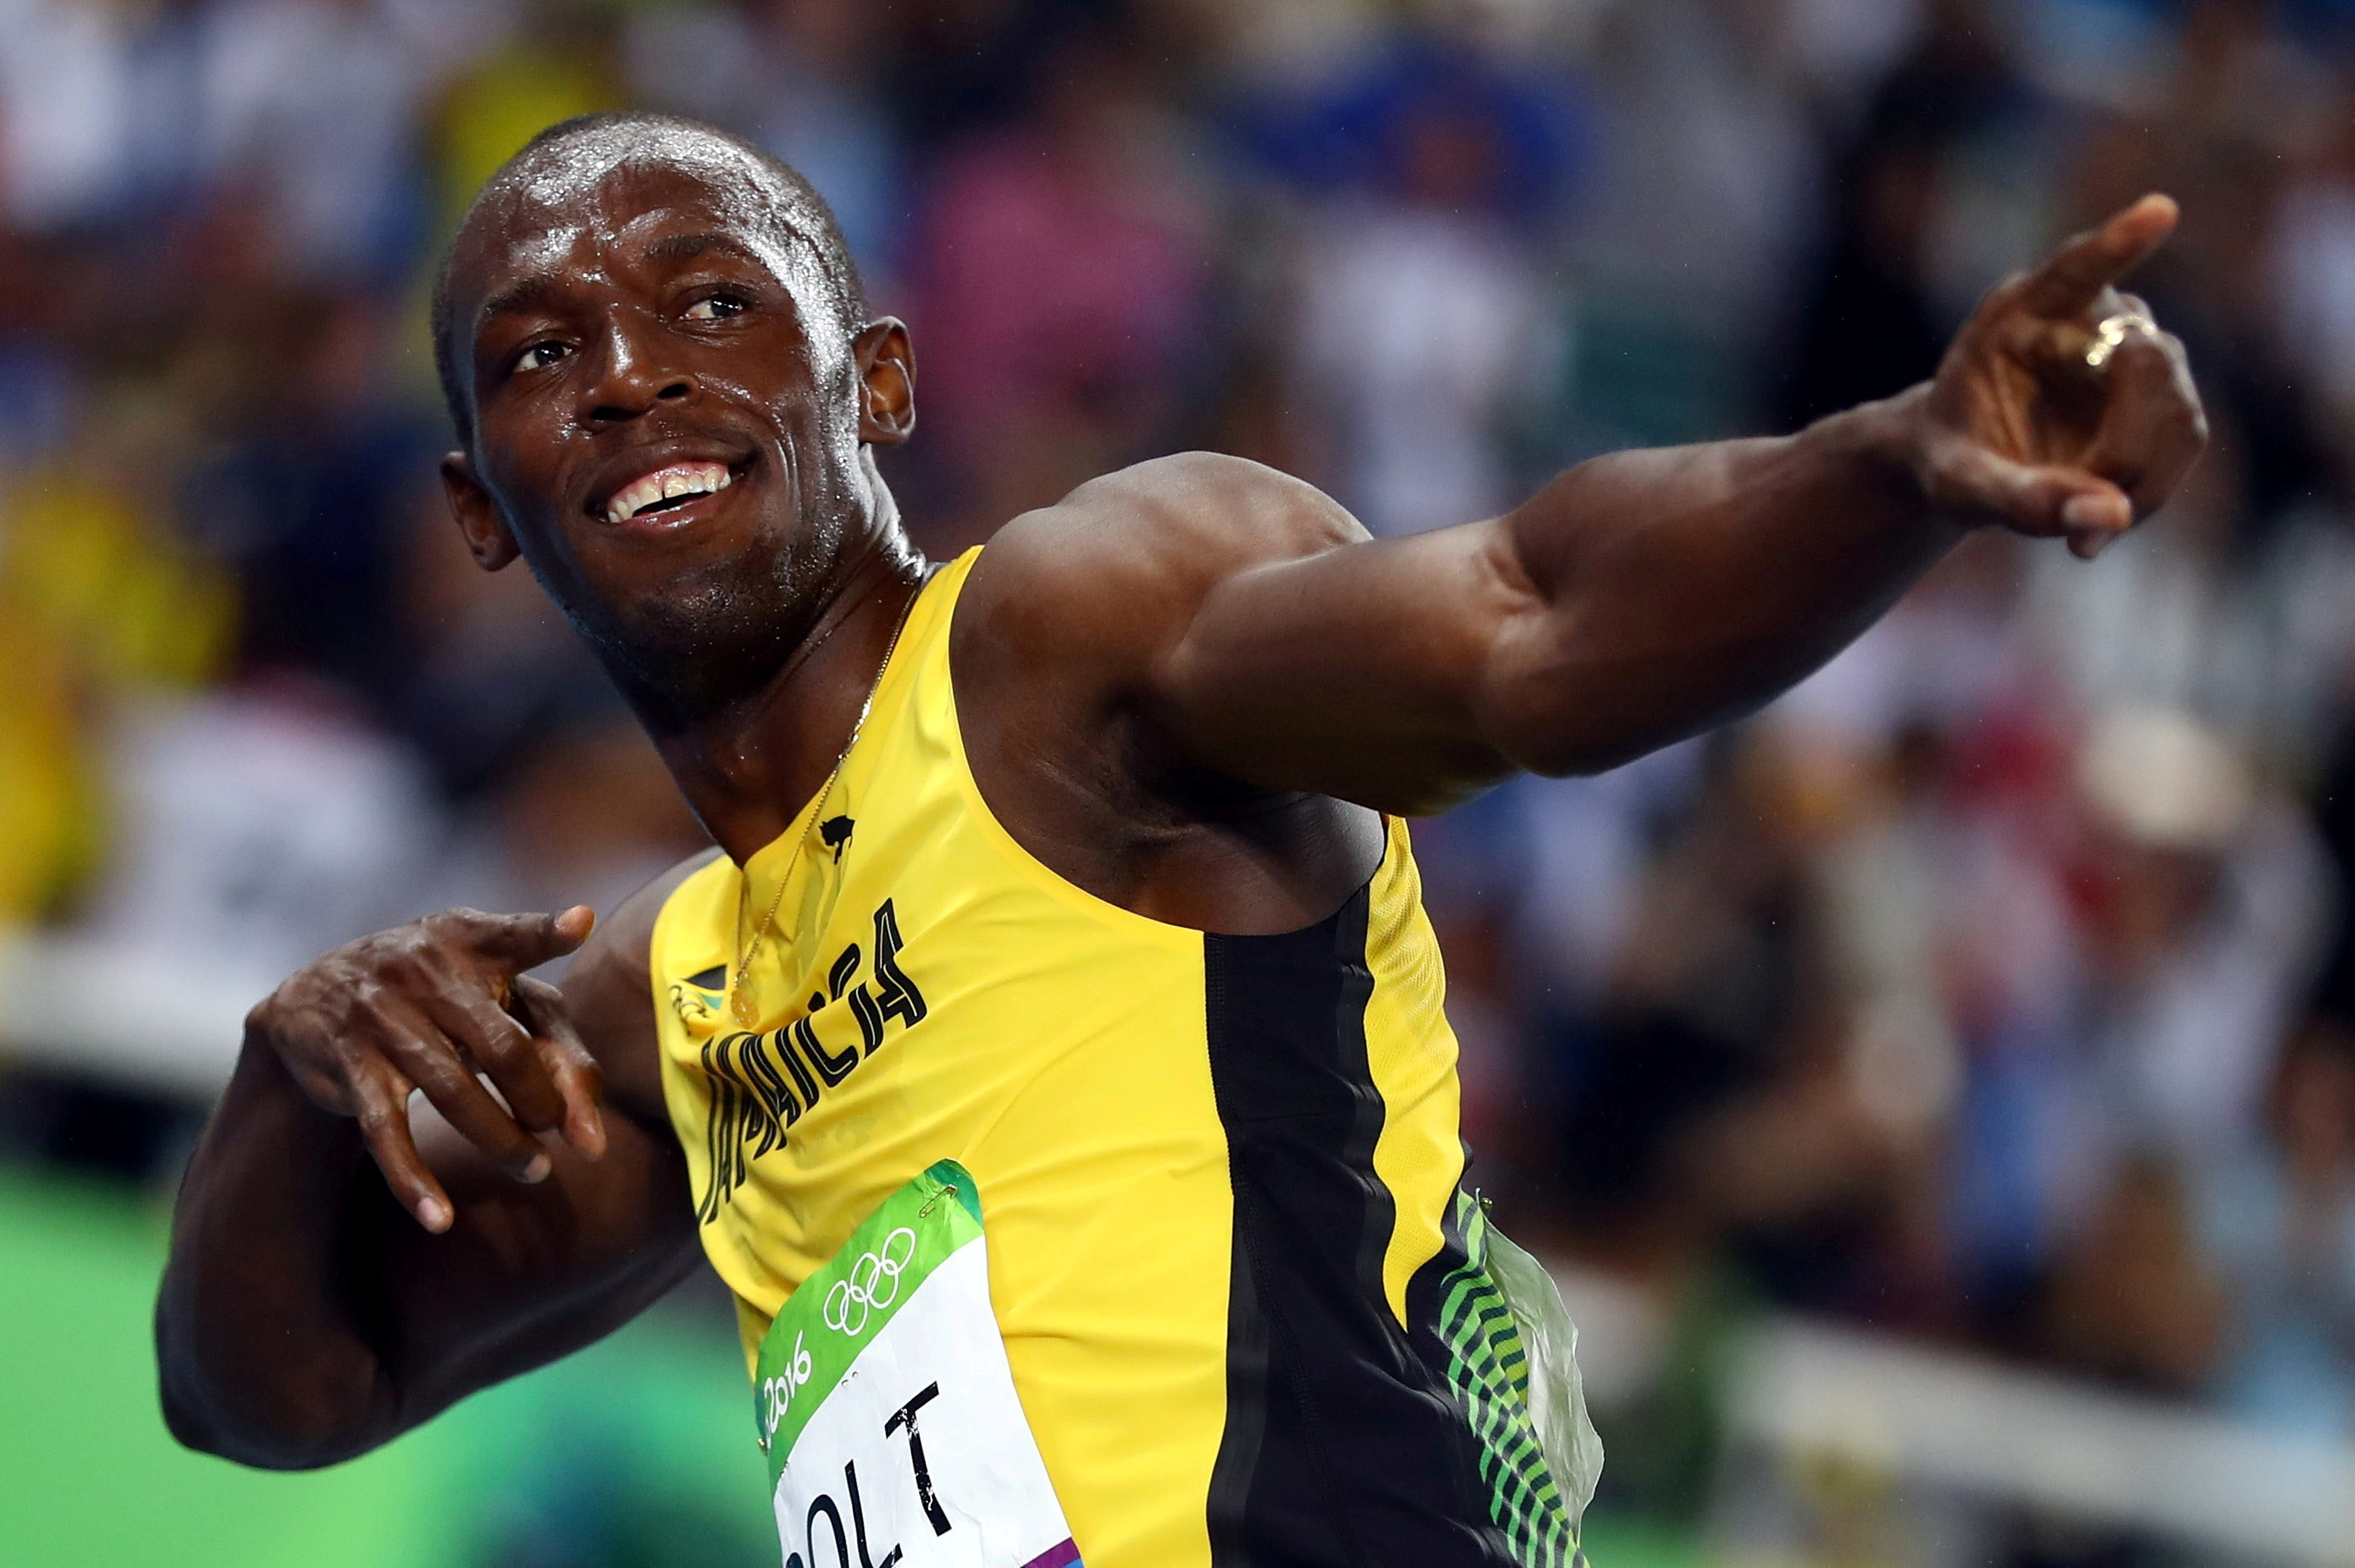 Usain Bolt moves to trademark logo of signature pose - ESPN